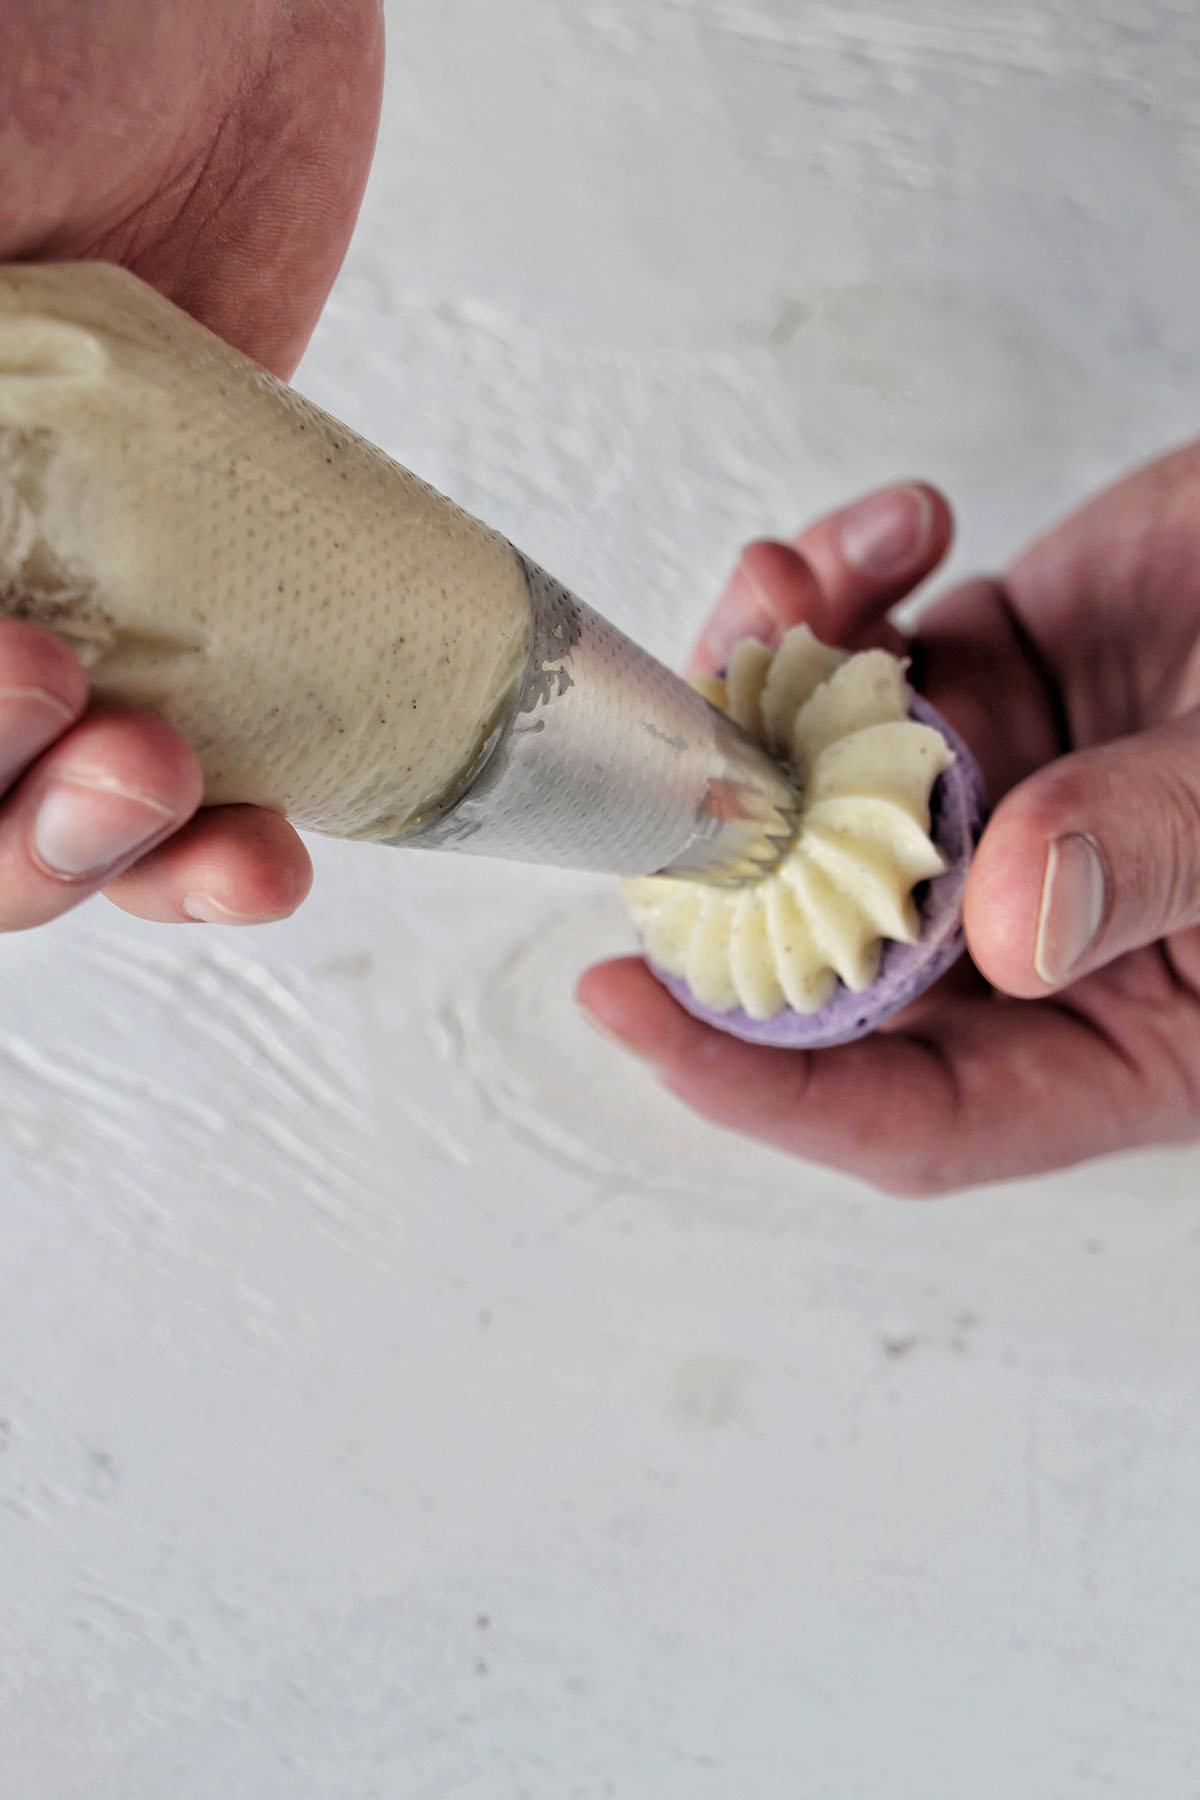 hand piping buttercream onto a purple macaron shell.